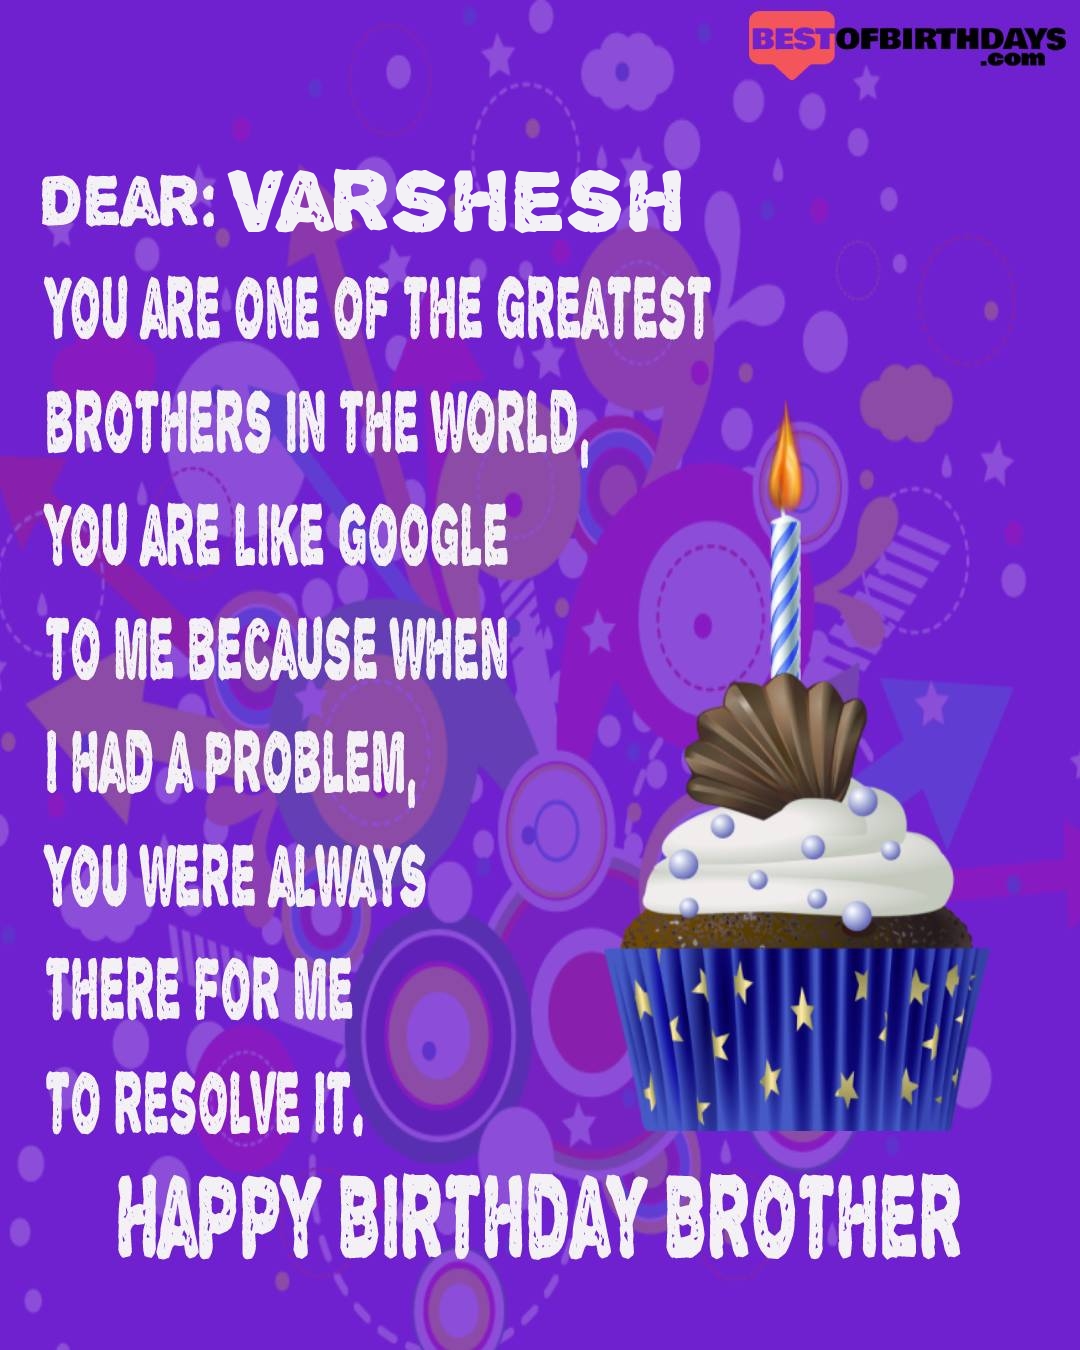 Happy birthday varshesh bhai brother bro